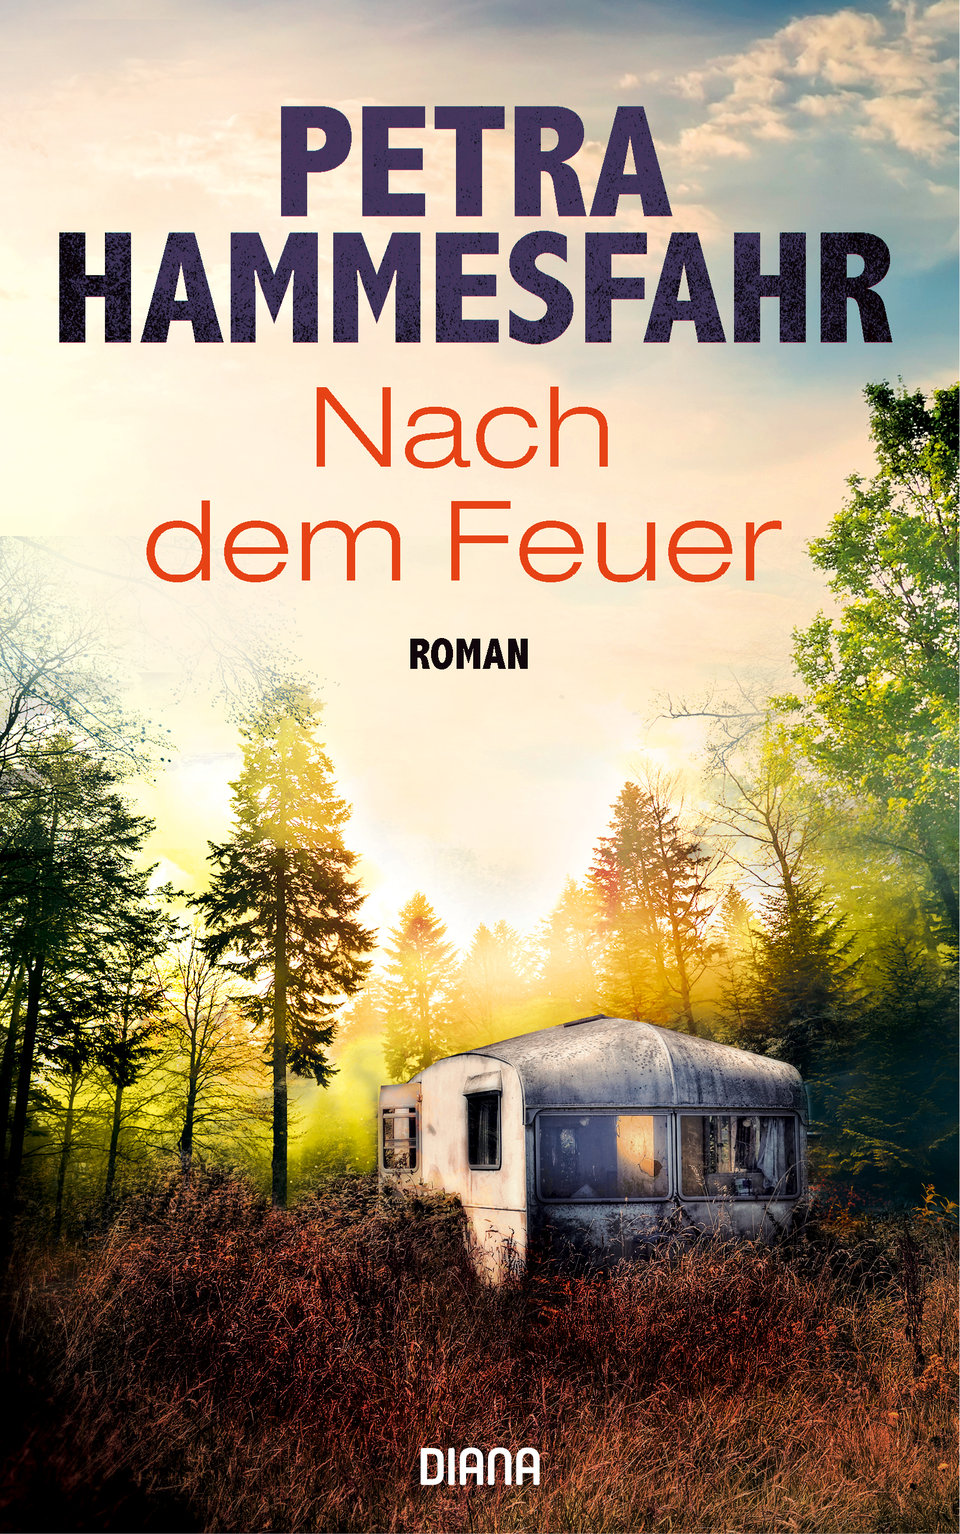 Petra Hammesfahr: Nach dem Feuer, Diana-Verlag, ISBN-13: 978-3453292437, Euro 20,00